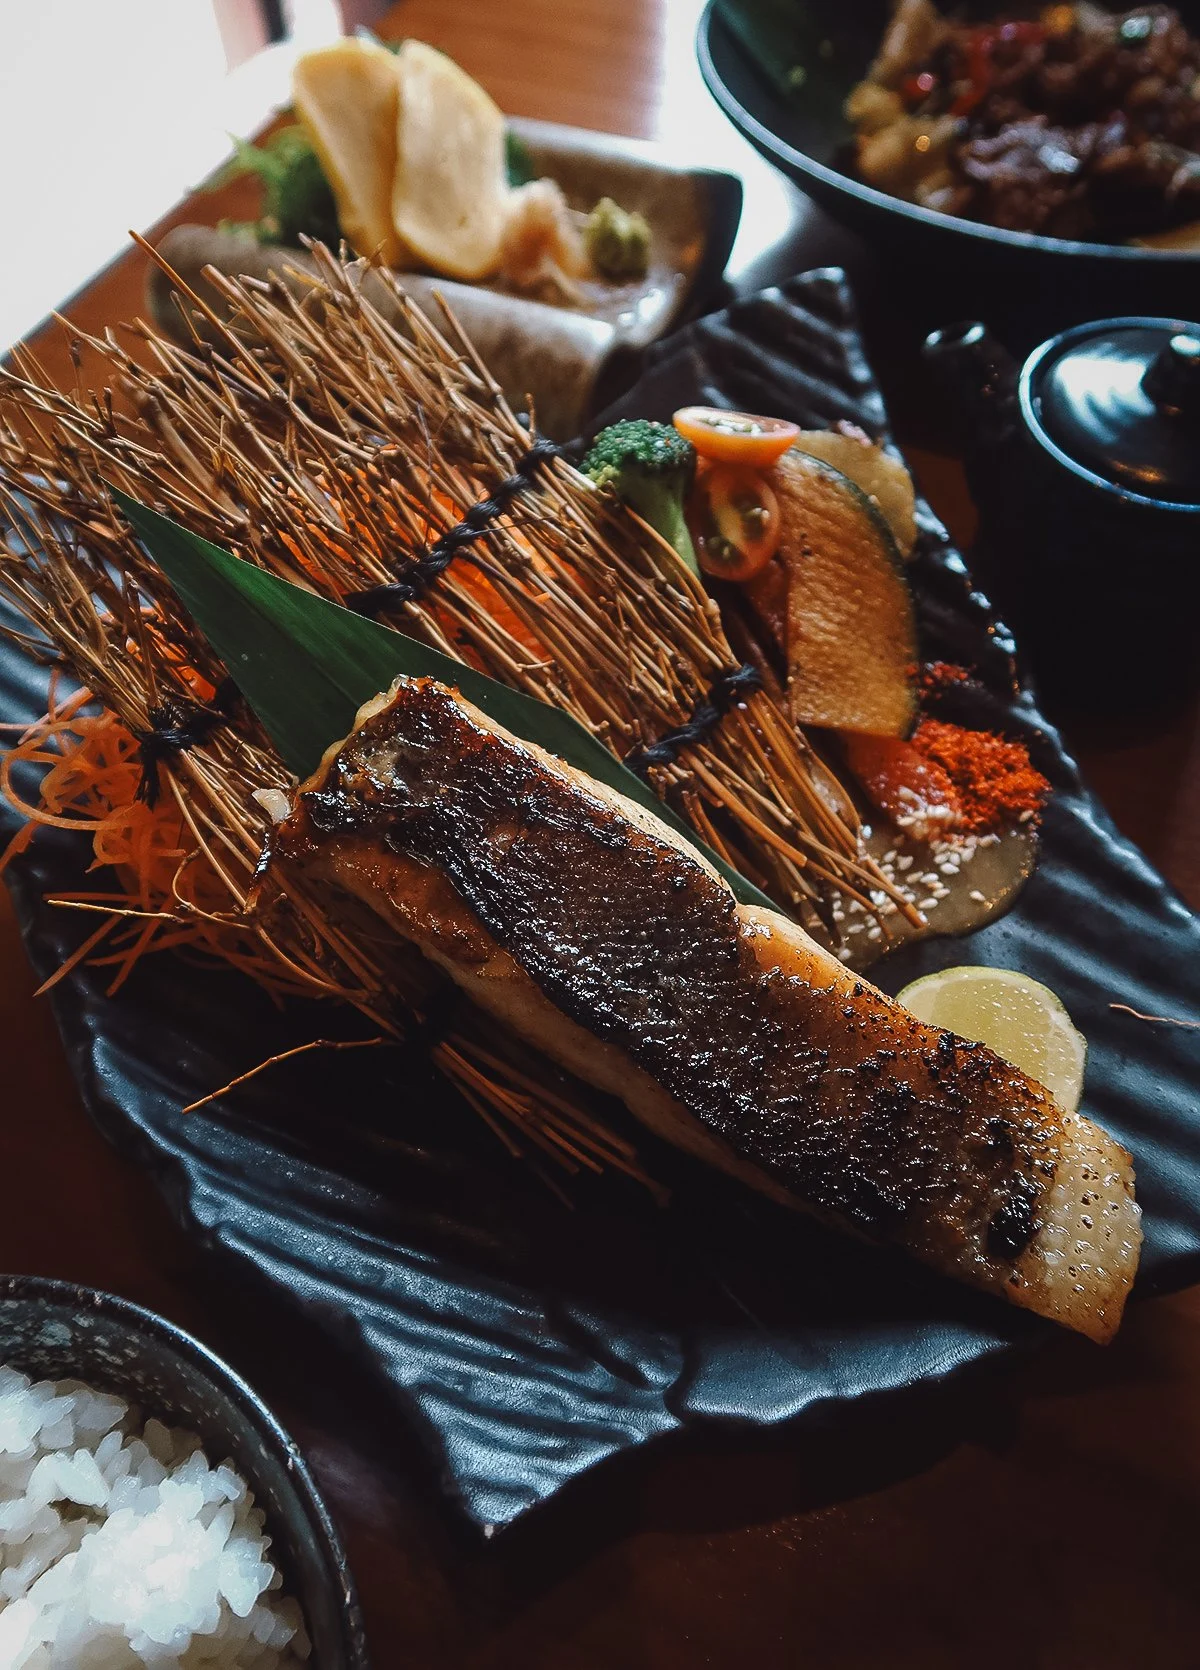 Black cod dish at a restaurant in Bali